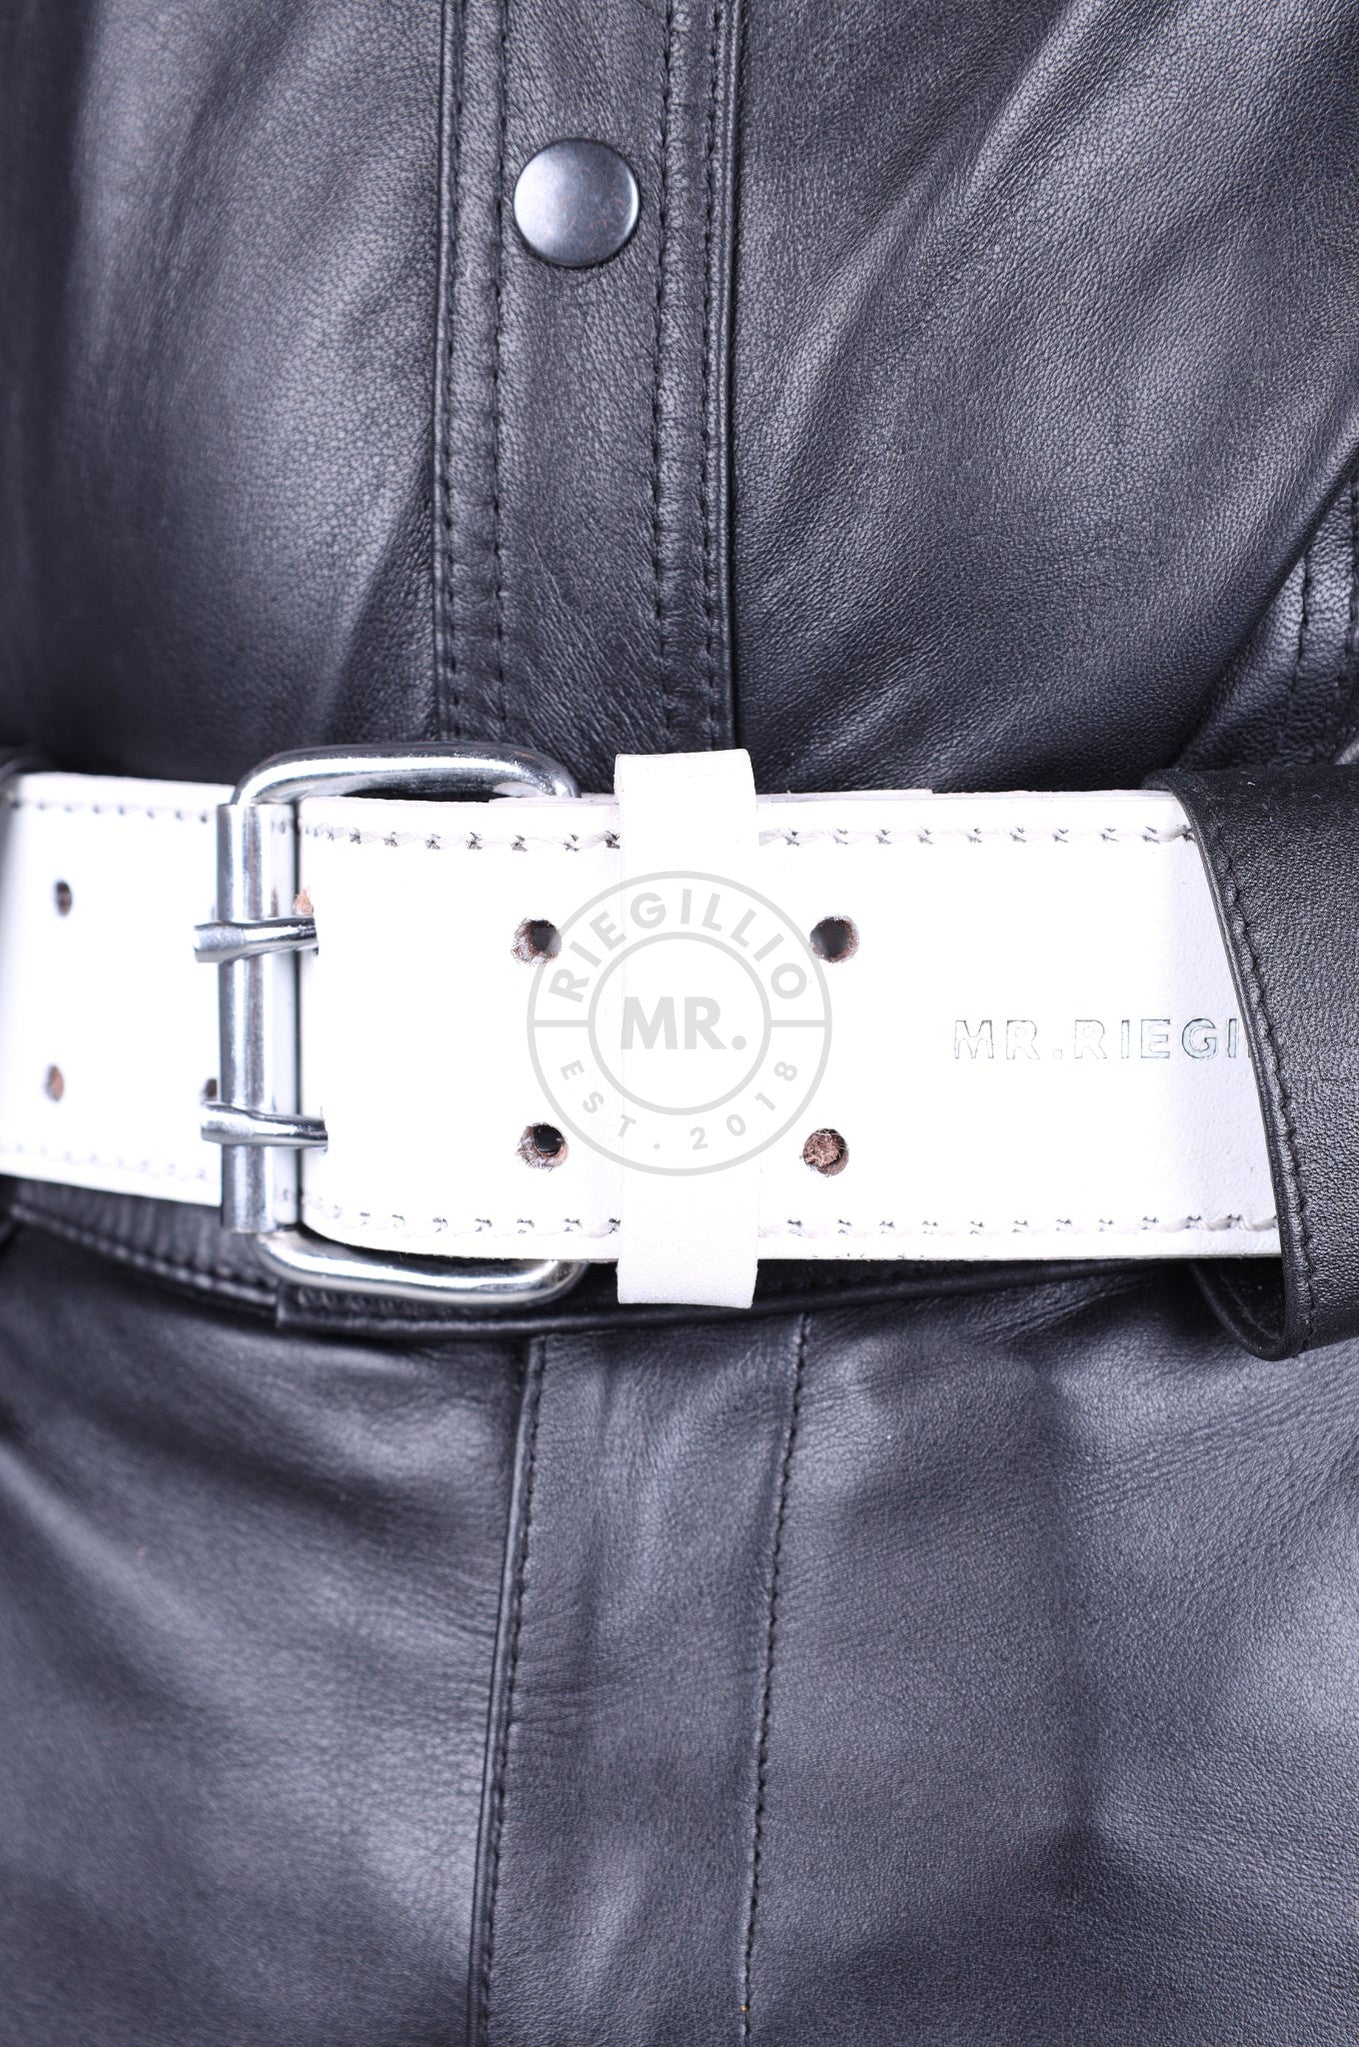 White Leather Belt at MR. Riegillio